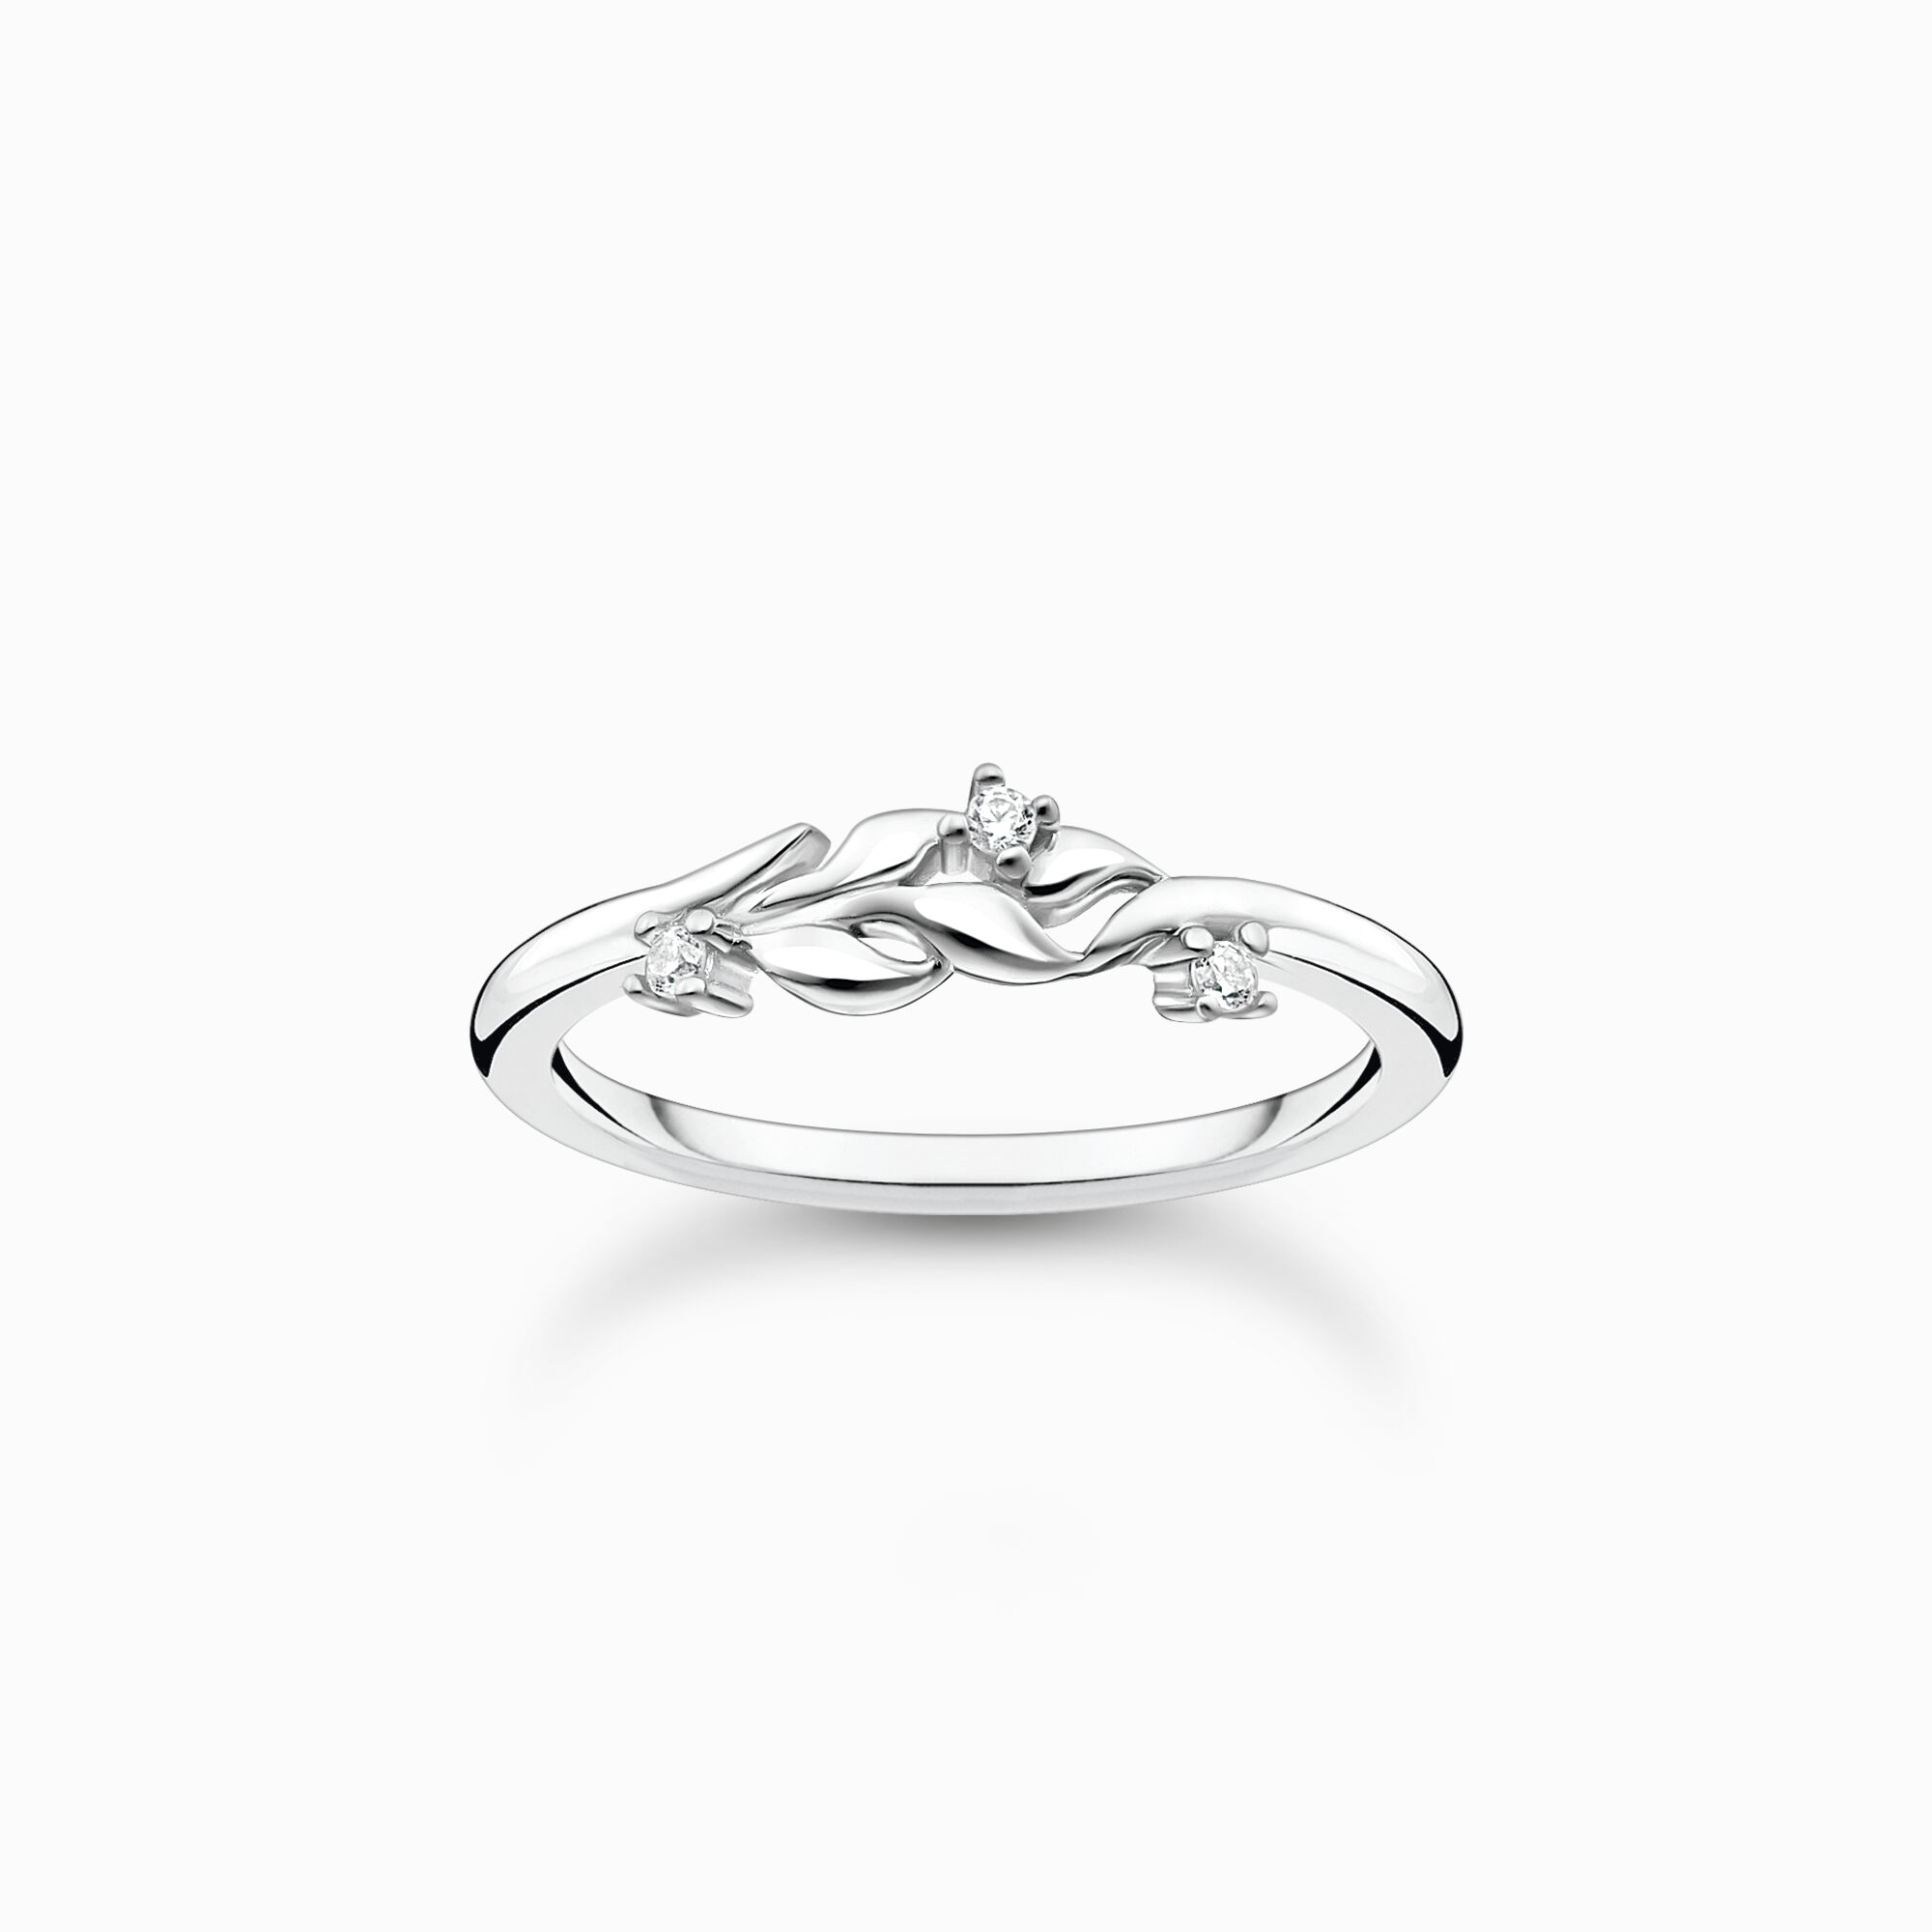 Ring blad med vita stenar silver ur kollektionen Charming Collection i THOMAS SABO:s onlineshop